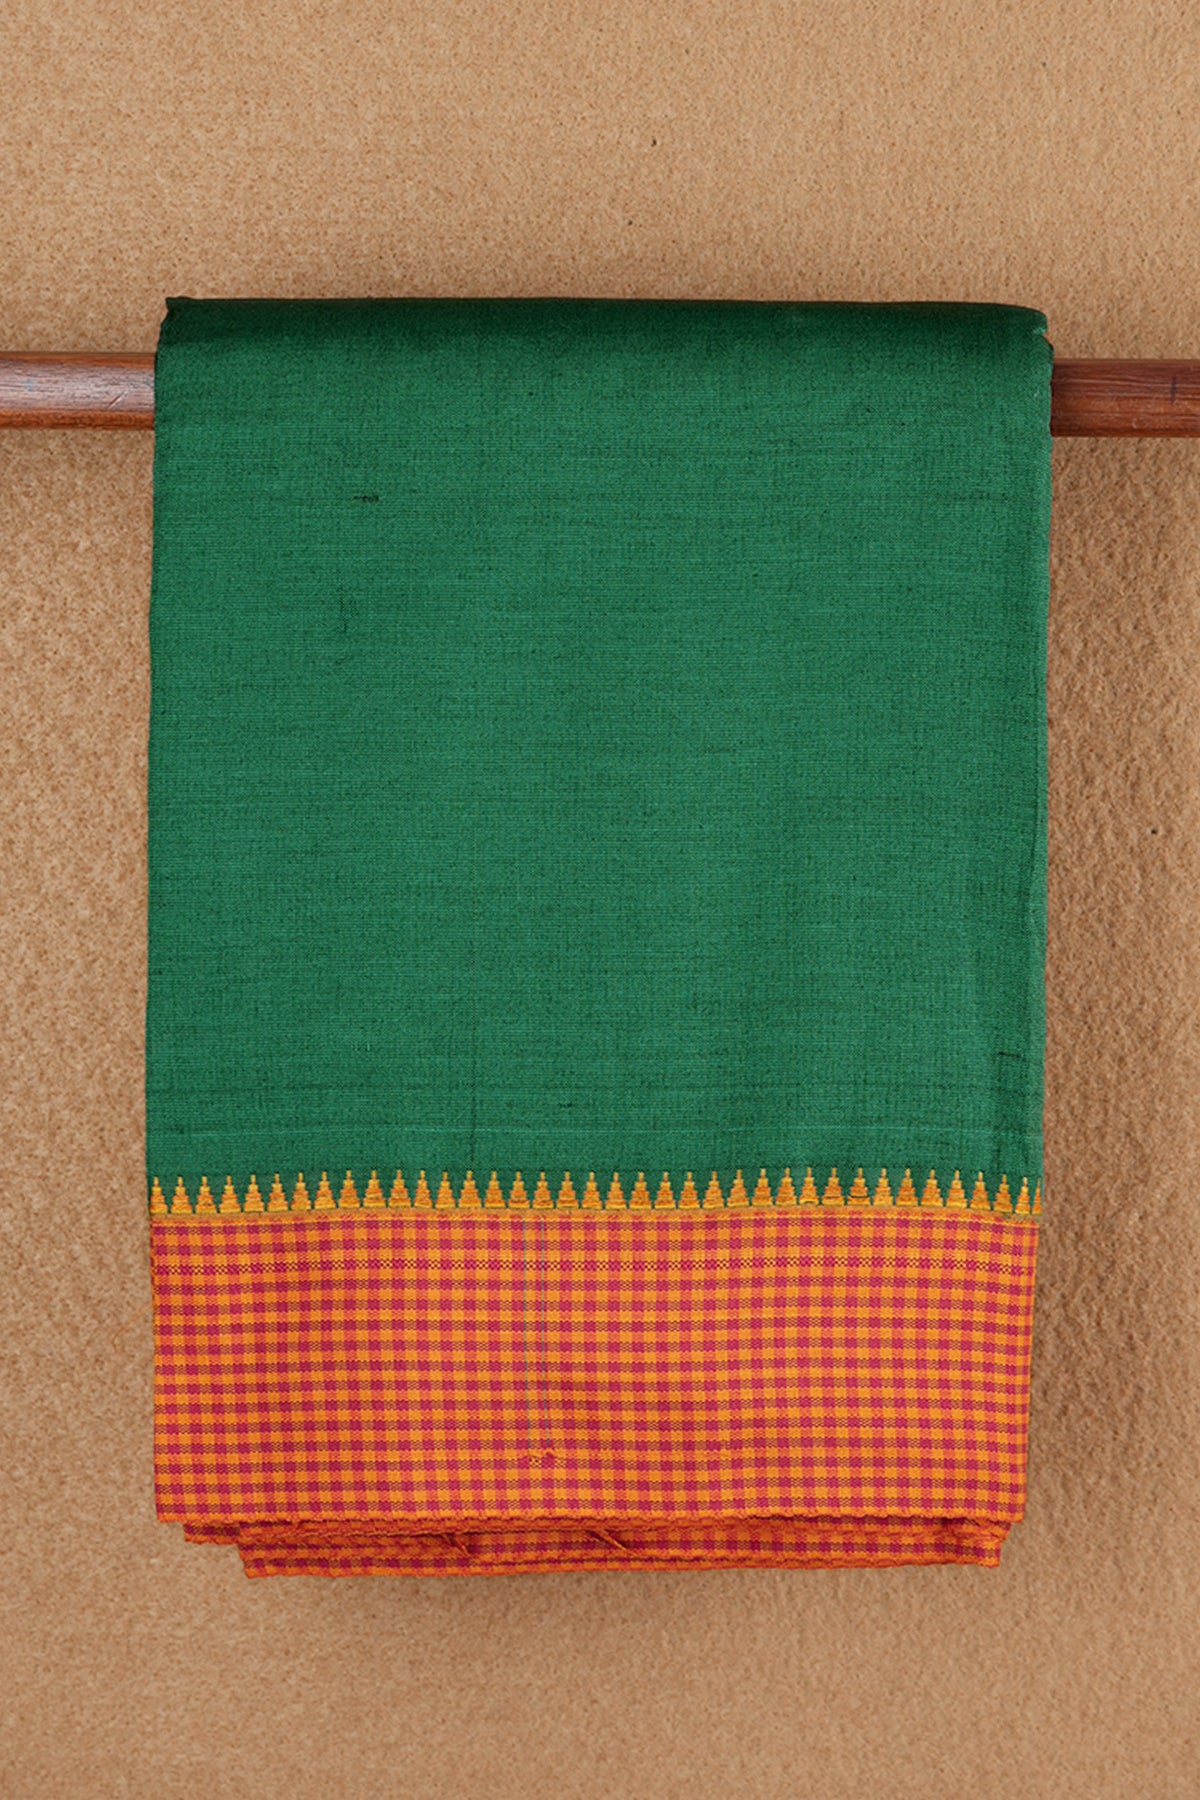 Contrast Checked Border Plain Emerald Green Dharwad Cotton Saree